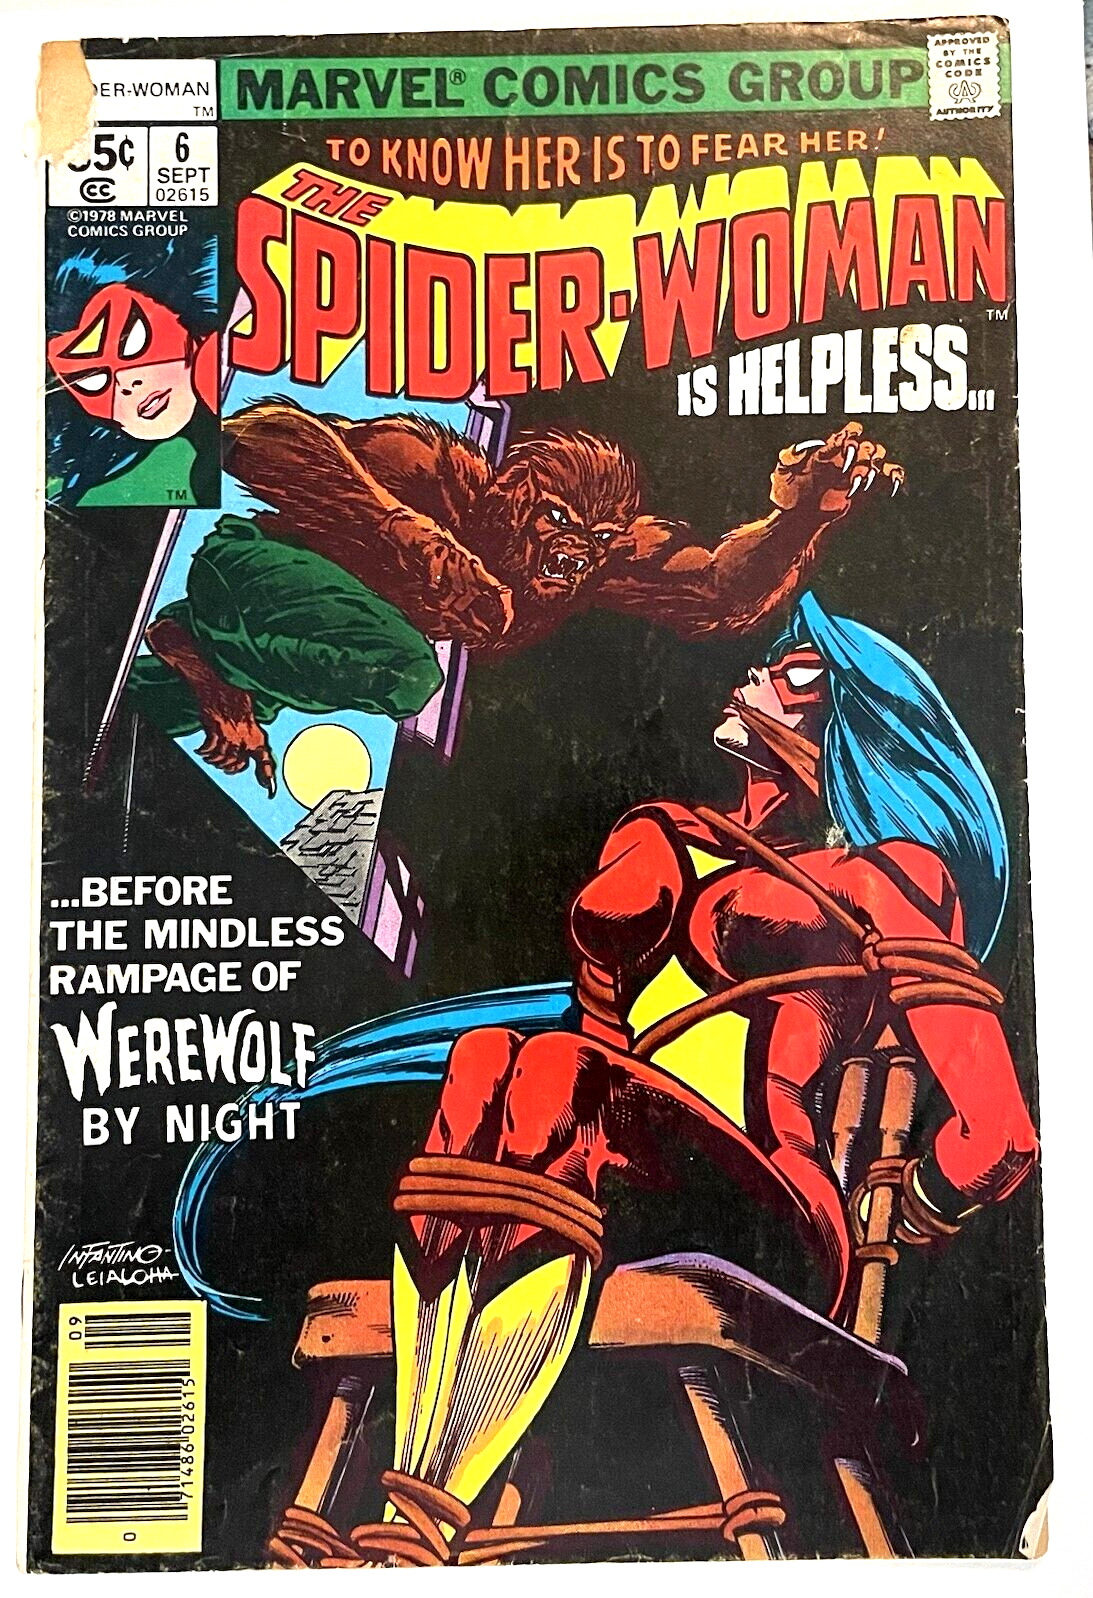 SPIDER-WOMAN #6 CVR A WEREWOLF BY NIGHT 1978 MARVEL COMICS